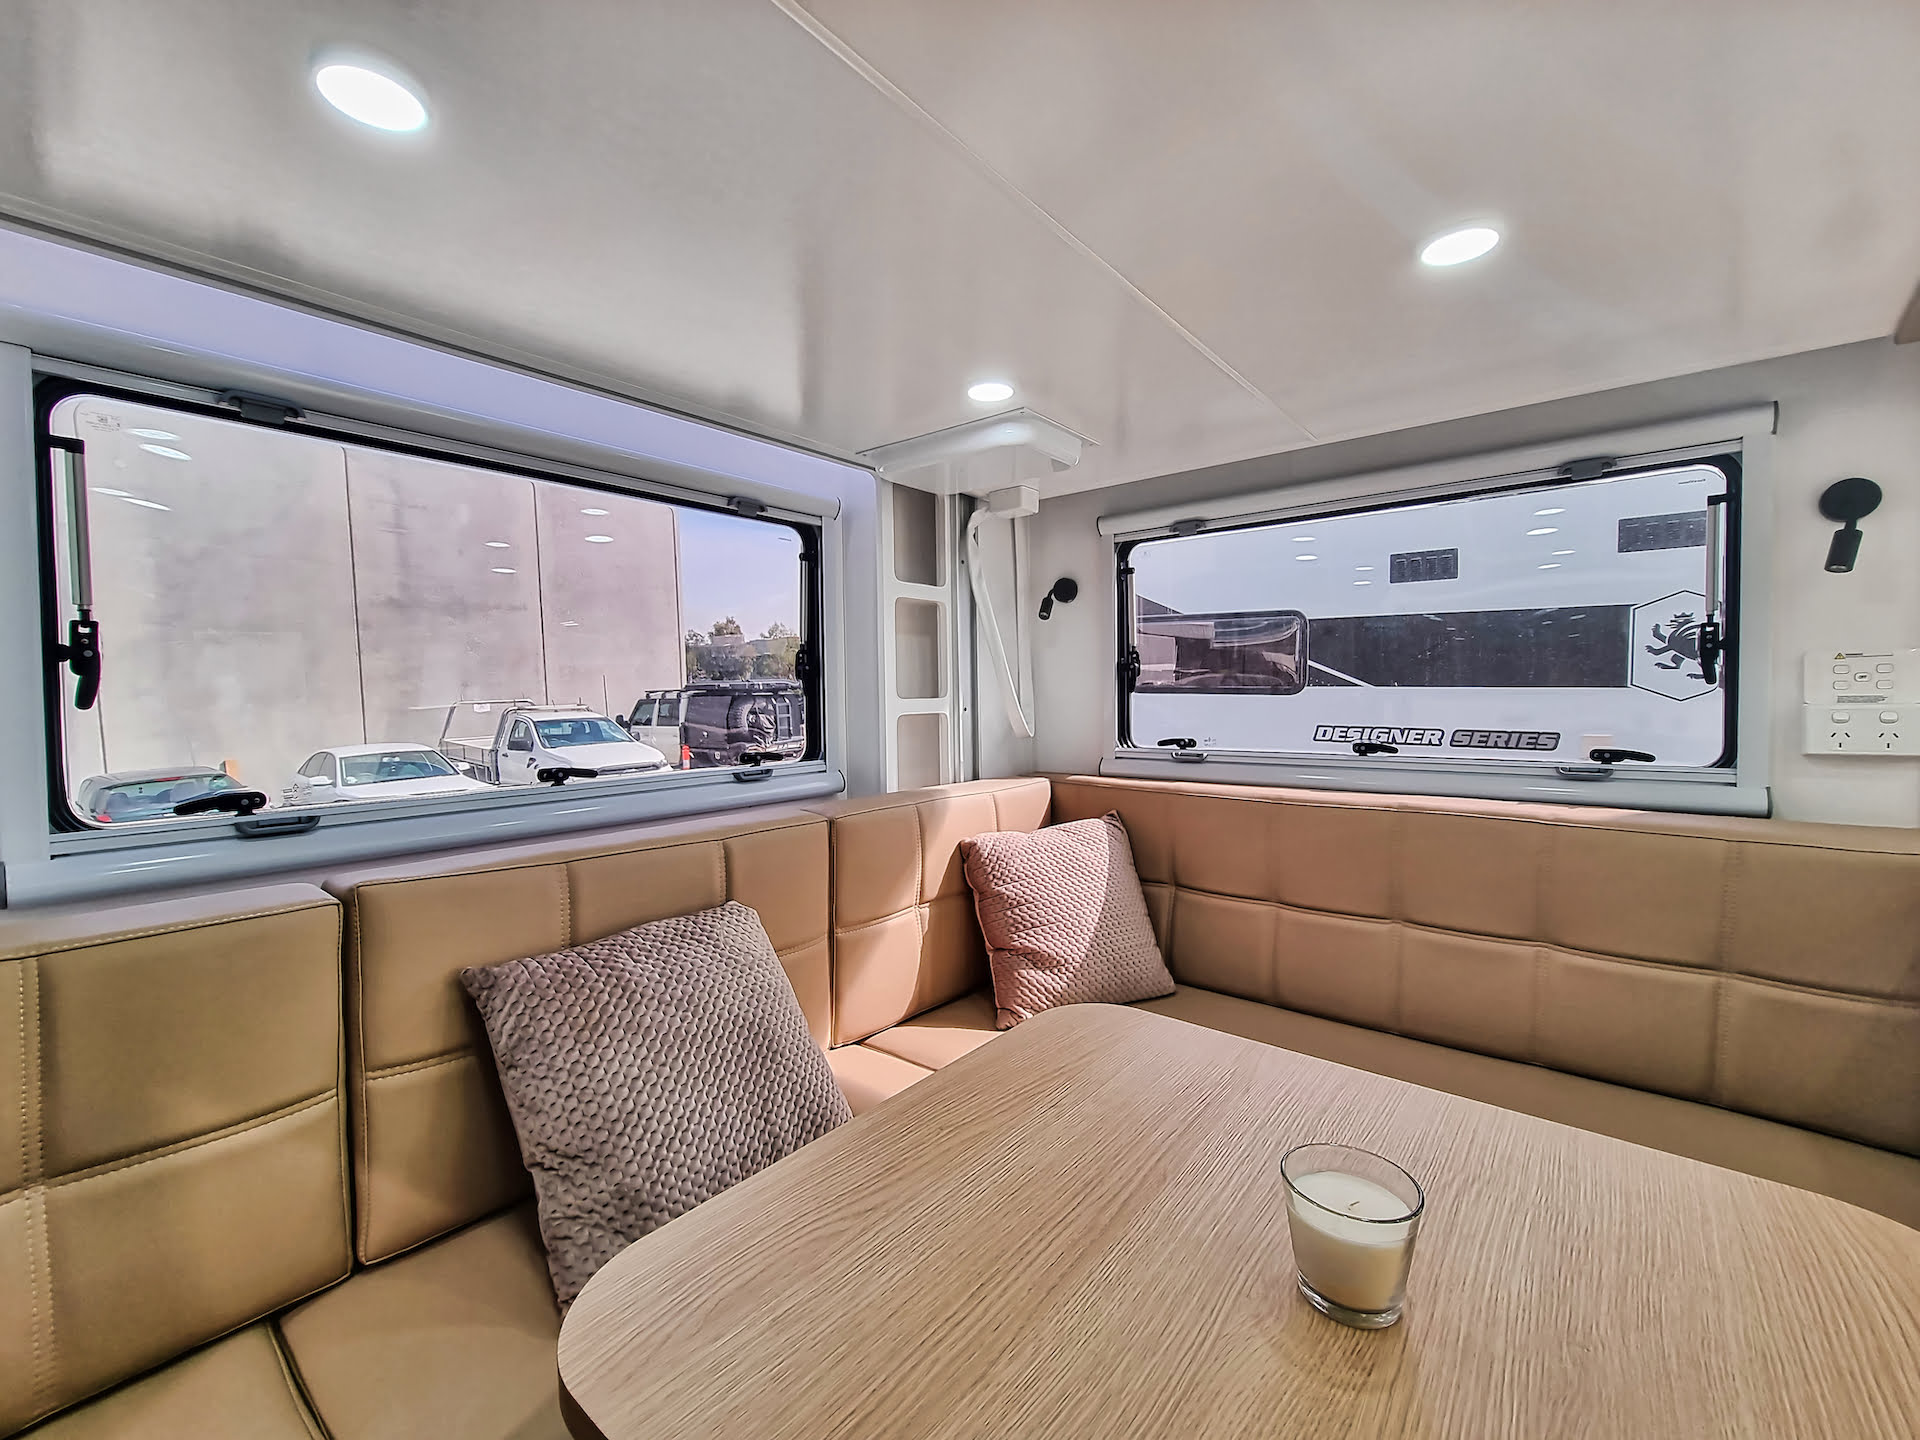 Step inside the Black Aussiemate Luxury Caravan, where airbag suspension meets exquisite interior craftsmanship.